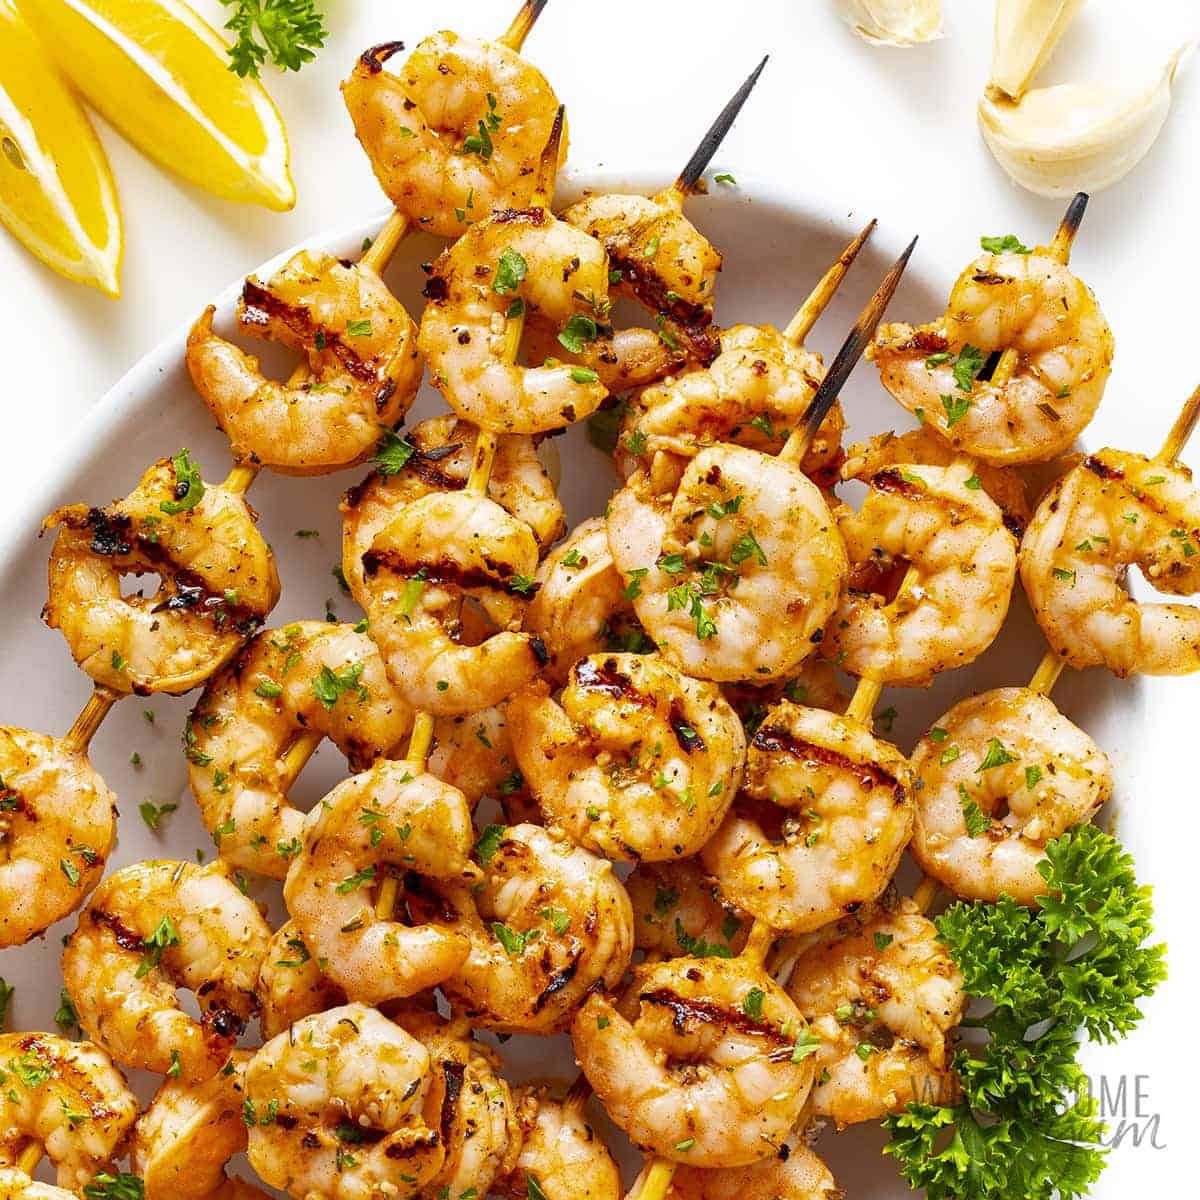 Juicy garlic grilled shrimp skewers with lemon and garlic